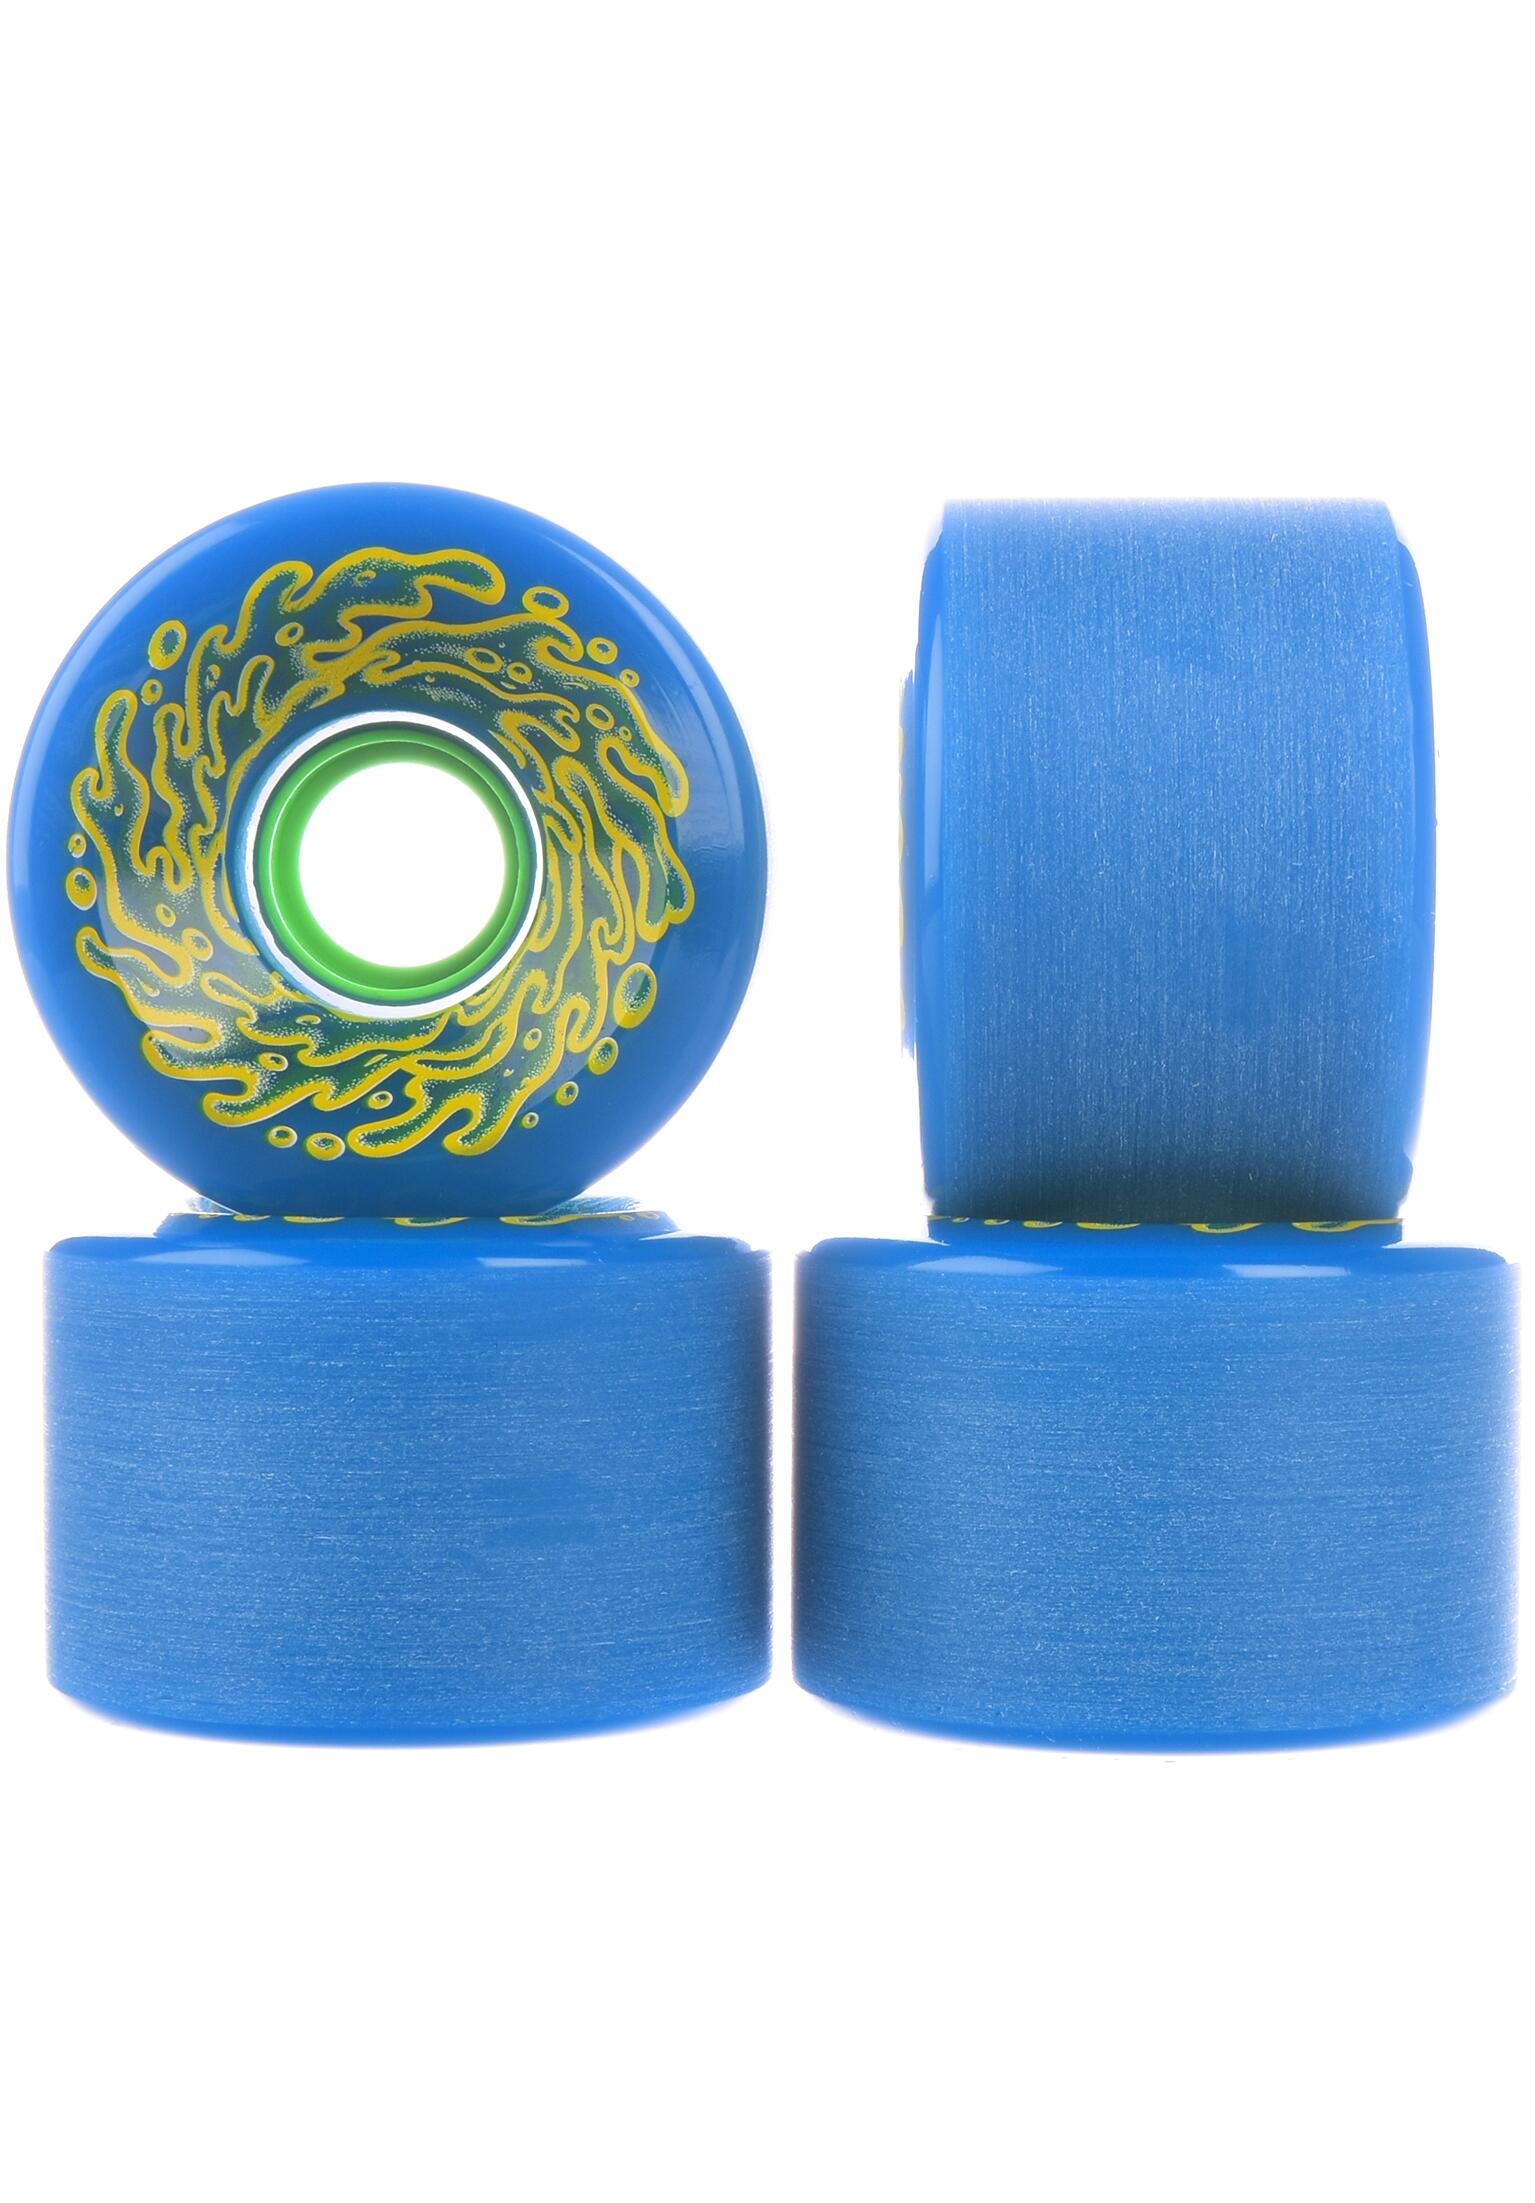 Santa Cruz 66mm Slime Balls OG`s 78A skateboardwielen blue - green